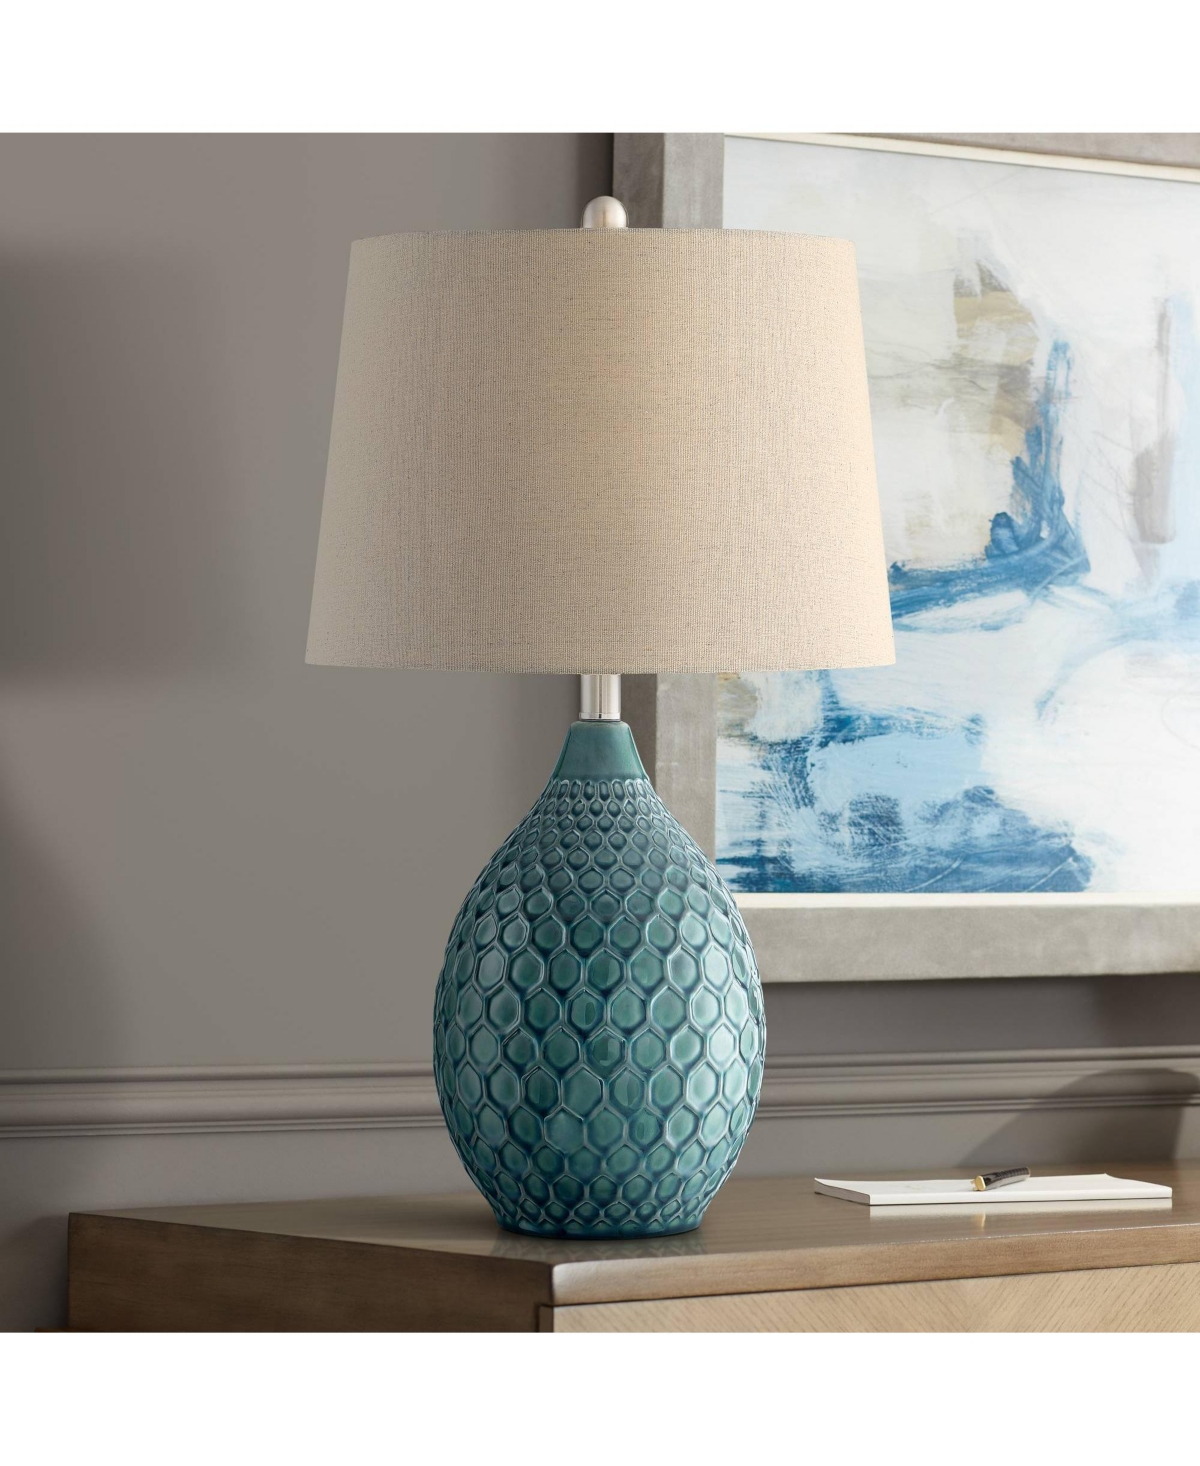 360 Lighting Kate Coastal Vase-shaped Table Lamp 24.75" High Sea Foam Blue Green Ceramic Oatmeal Tapered Drum Sha